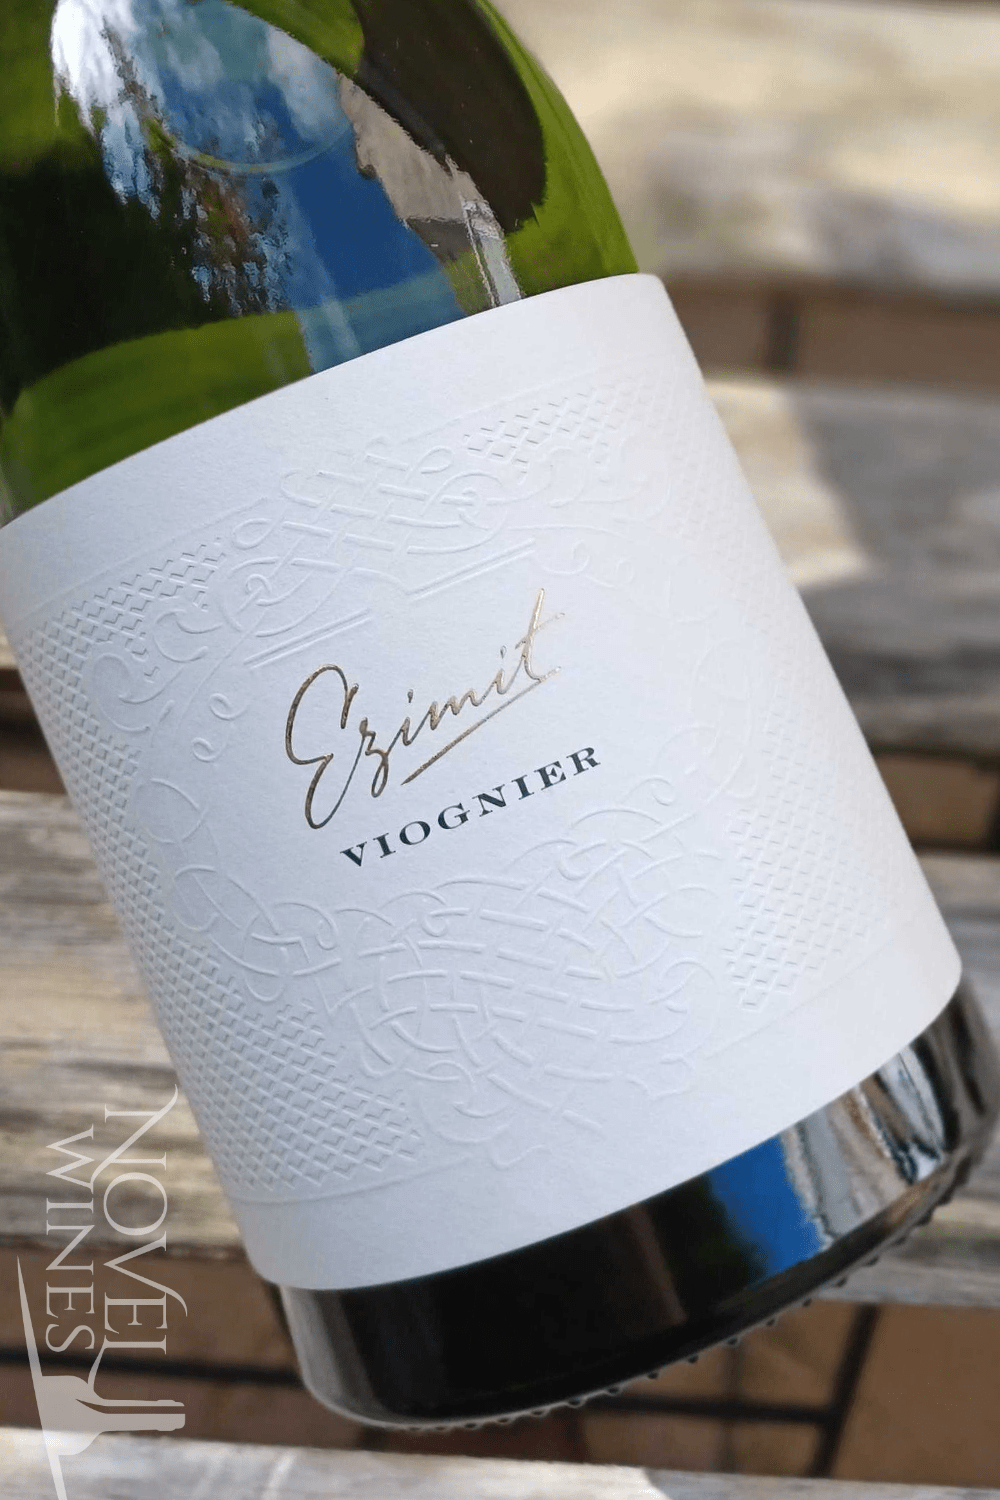 Ezimit White Wine Ezimit Viognier 2022, Republic of North Macedonia